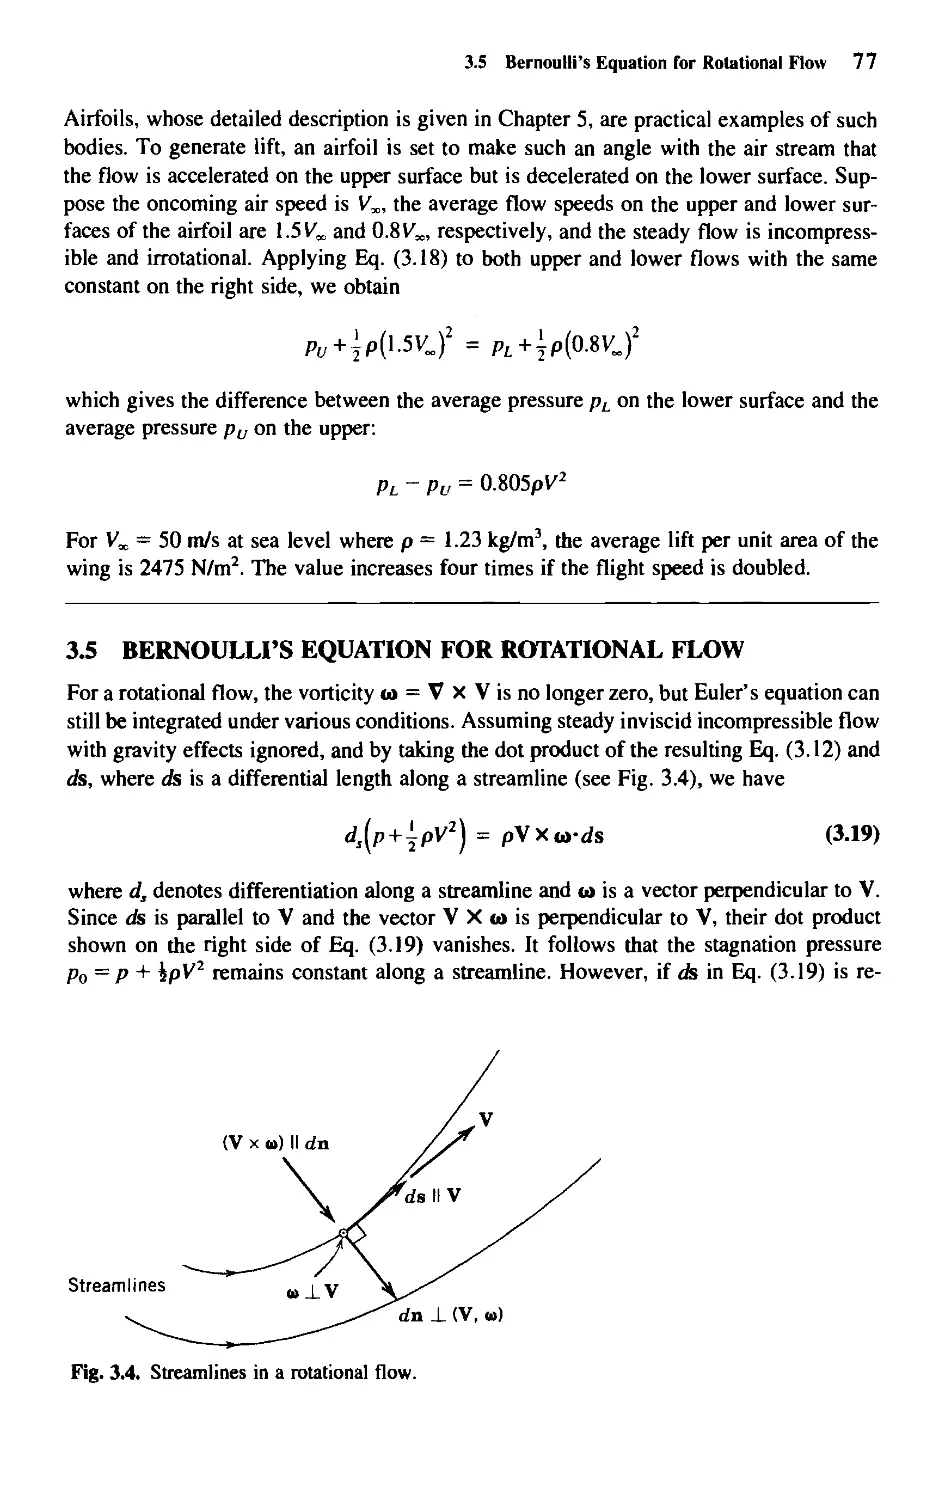 3.5 - Bernoulli's Equation for Rotational Flow